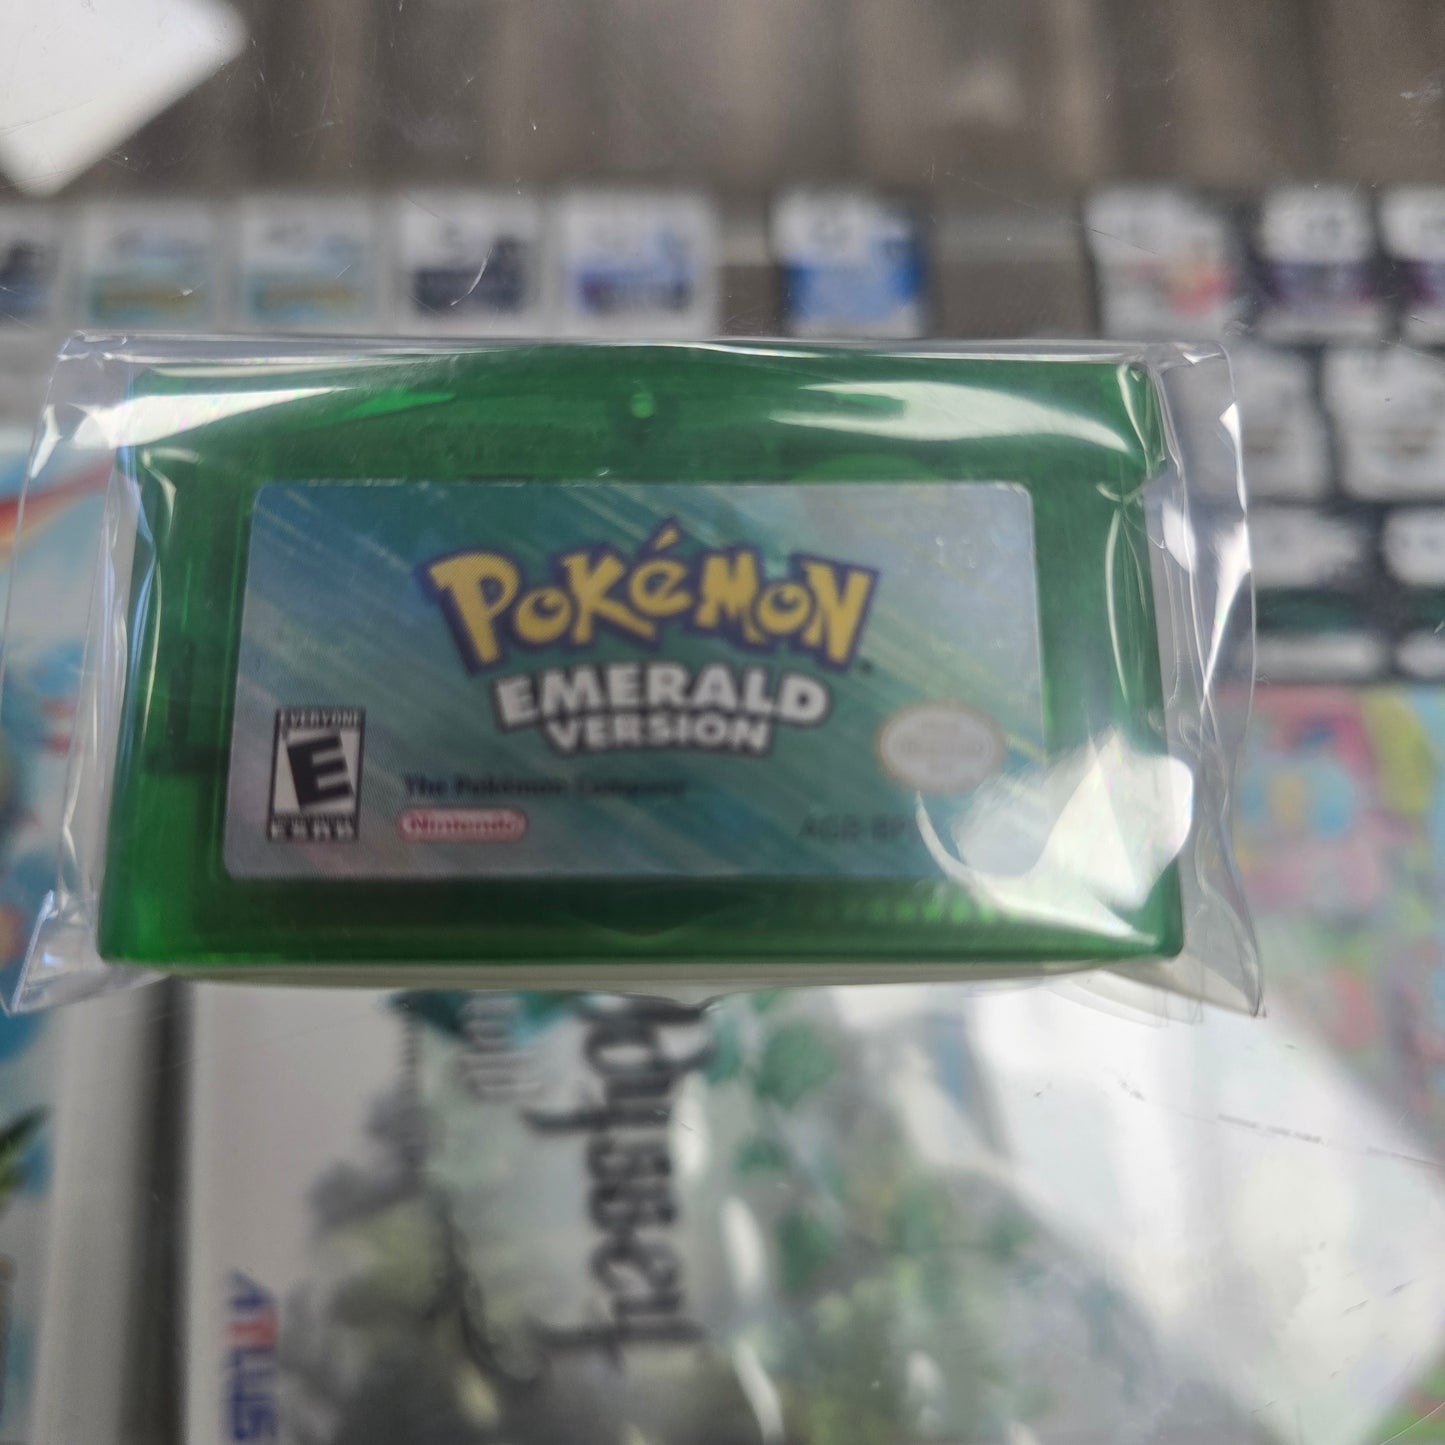 Pokémon Emerald (New Battery) (Great Label) Nintendo Gameboy Advance